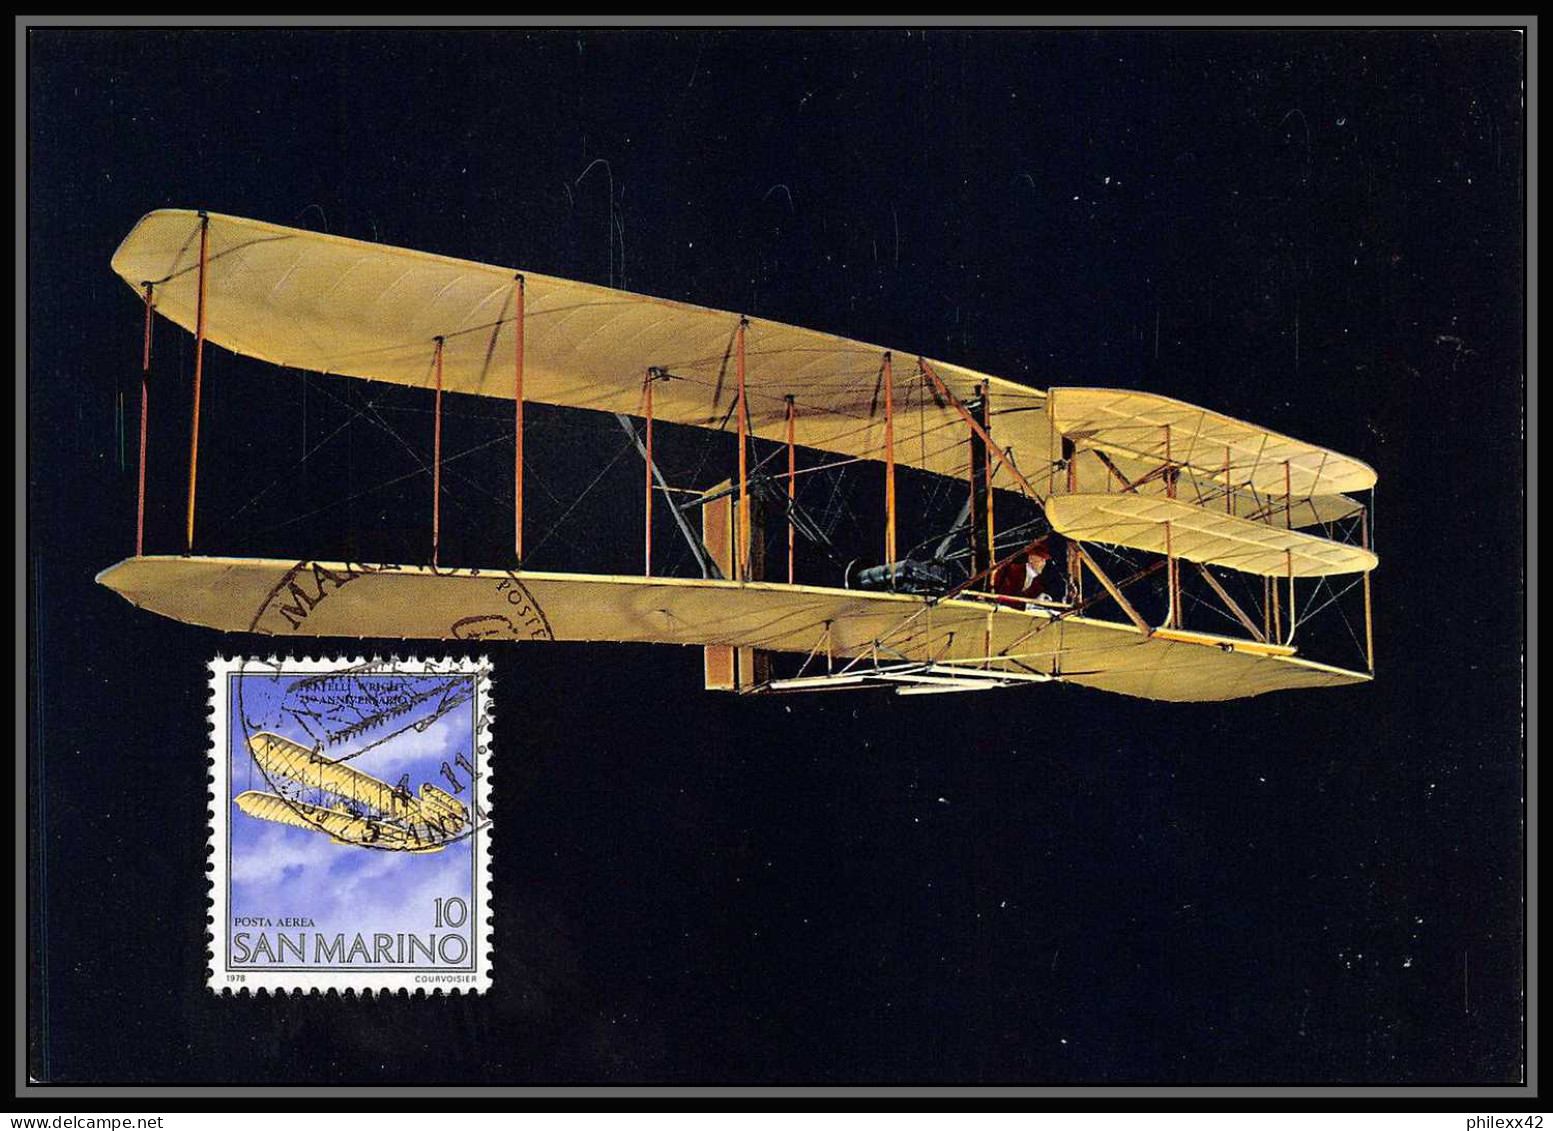 san marin (san marino) - Carte maximum (card) 1903 mi N°165/167 posta aerea 1978 the first flight of the wright brothers